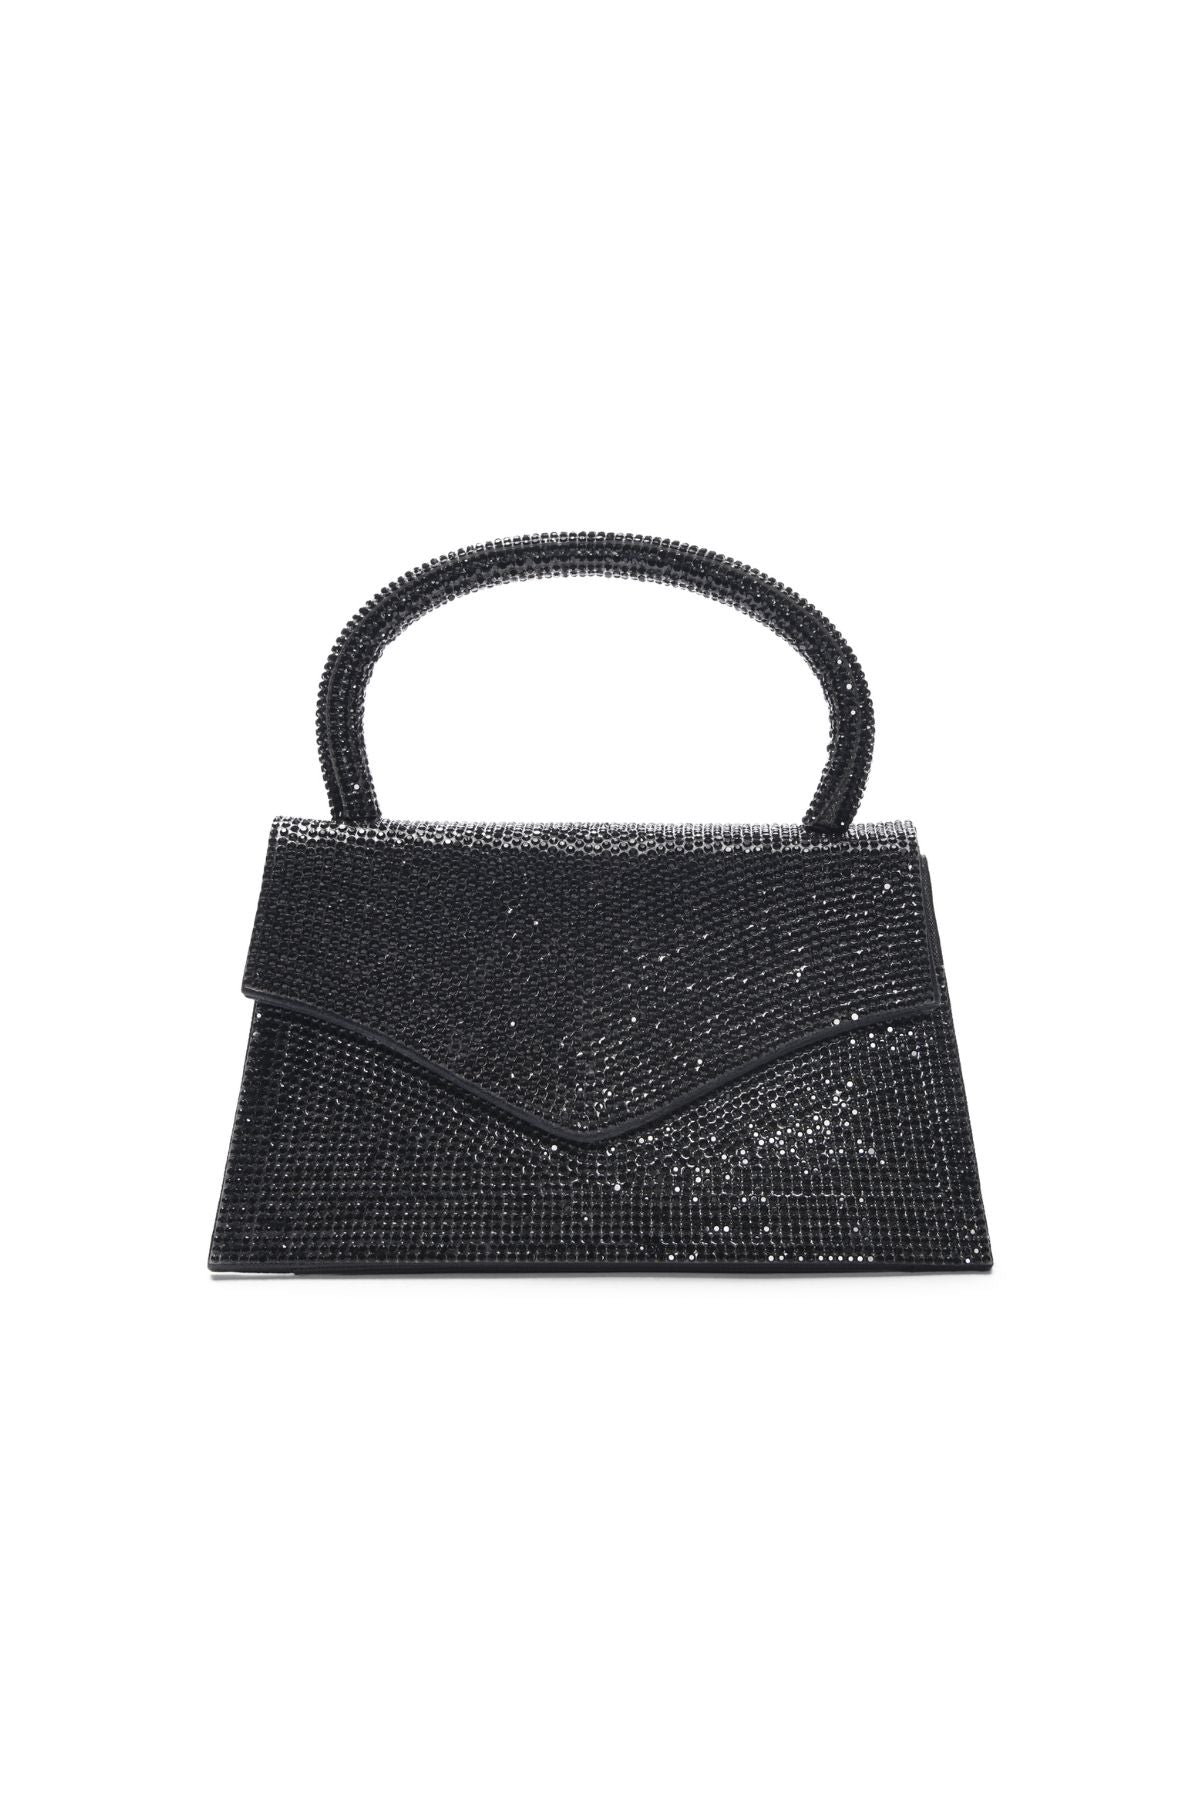 Black glitter handbag with top handle